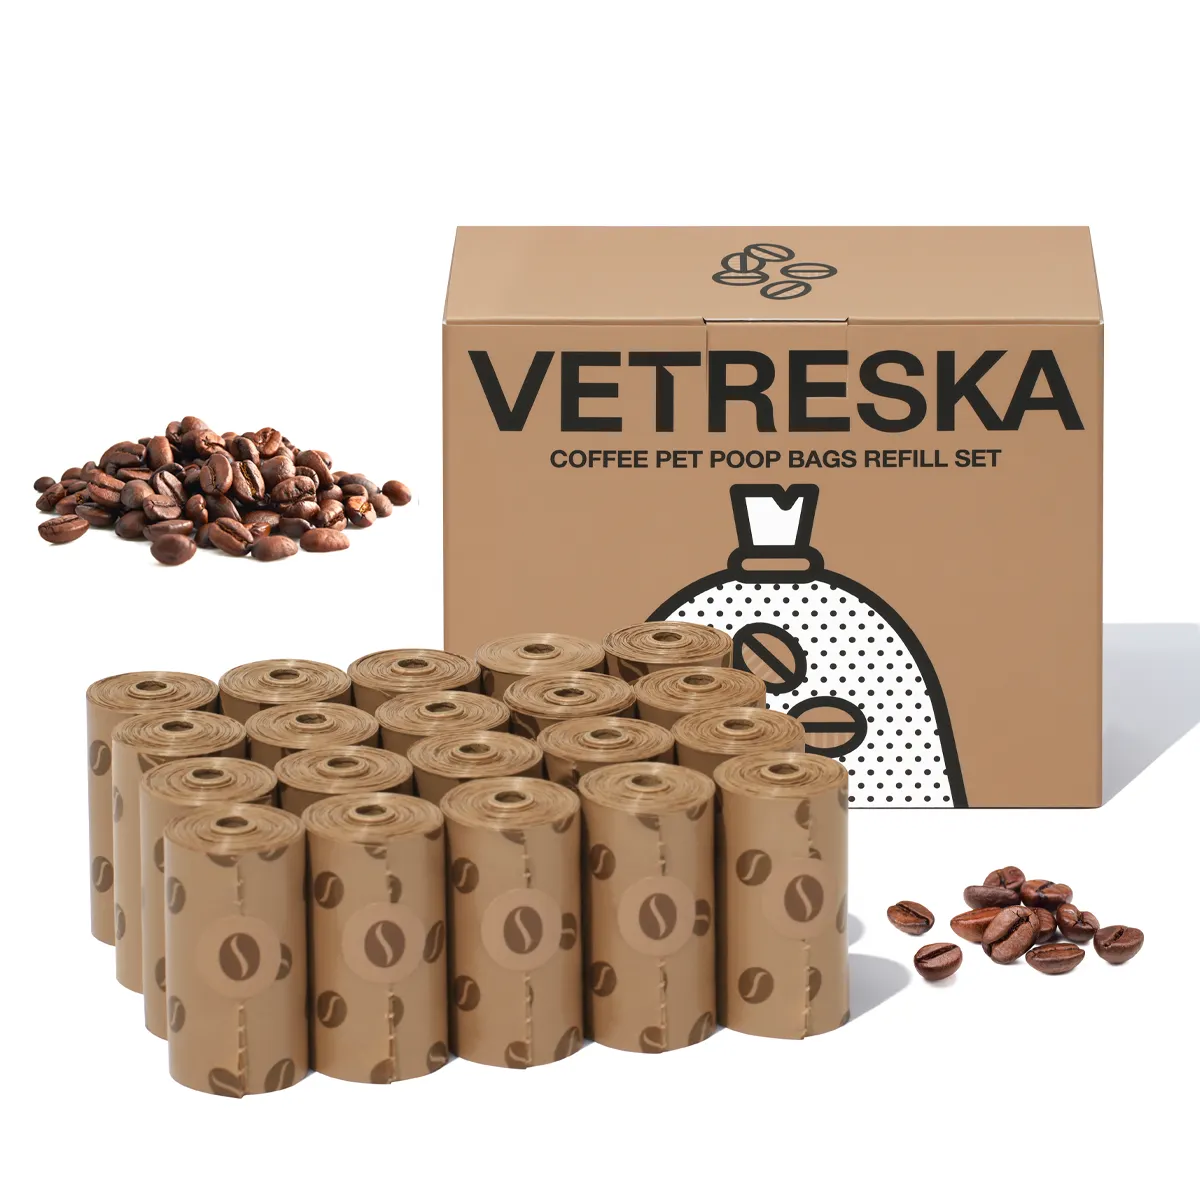 Vetreska - Coffee Pet Poop Bags Refill Set (20 Rolls)